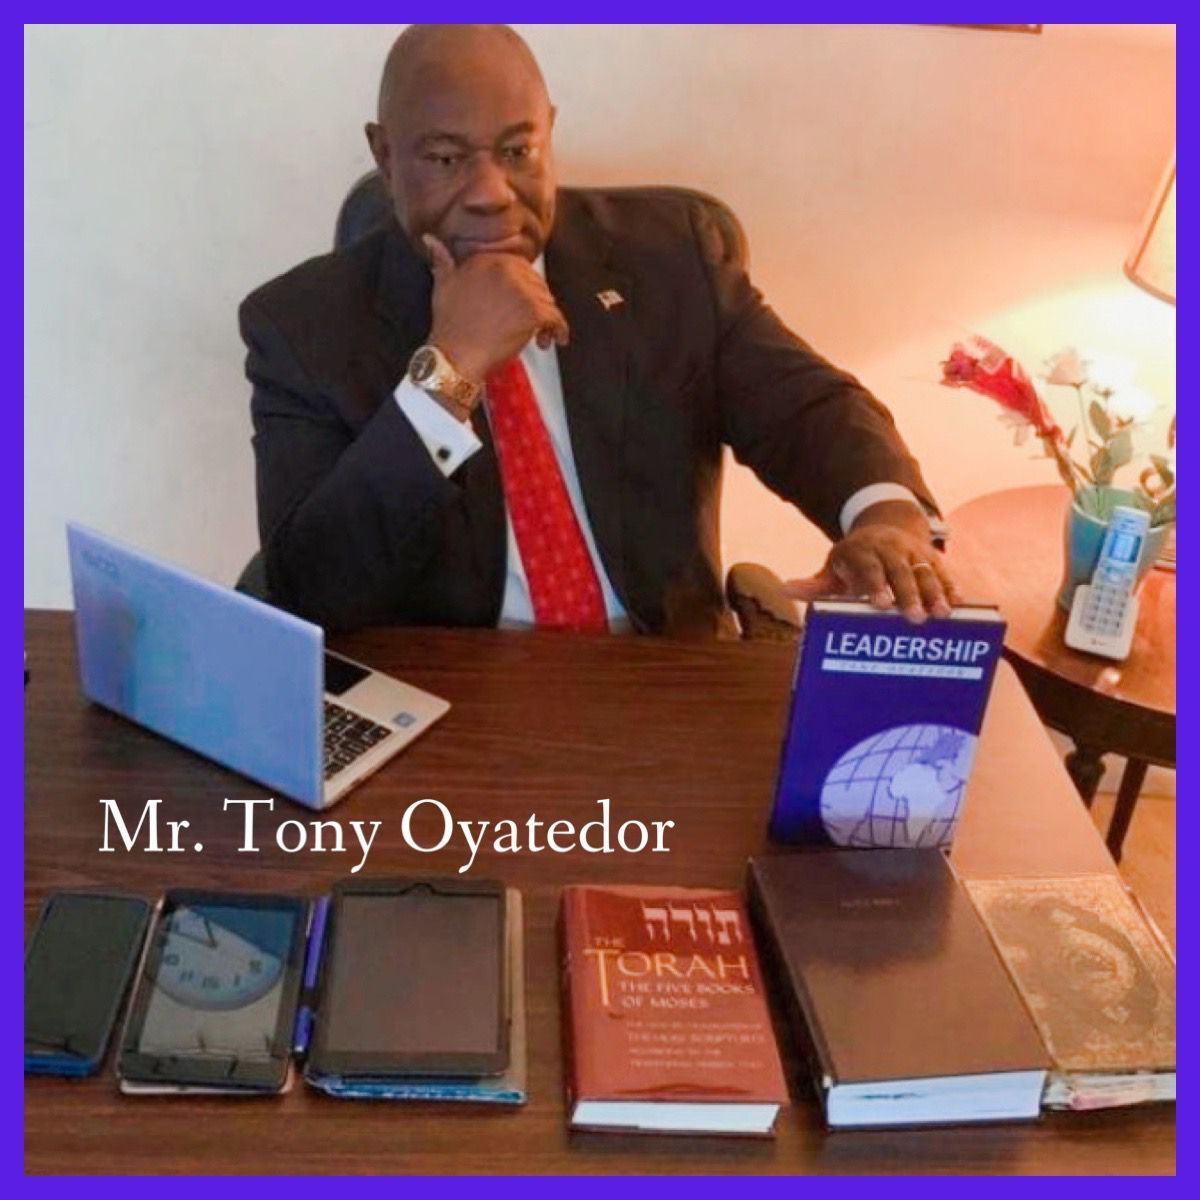 Mr. Tony Oyatedor